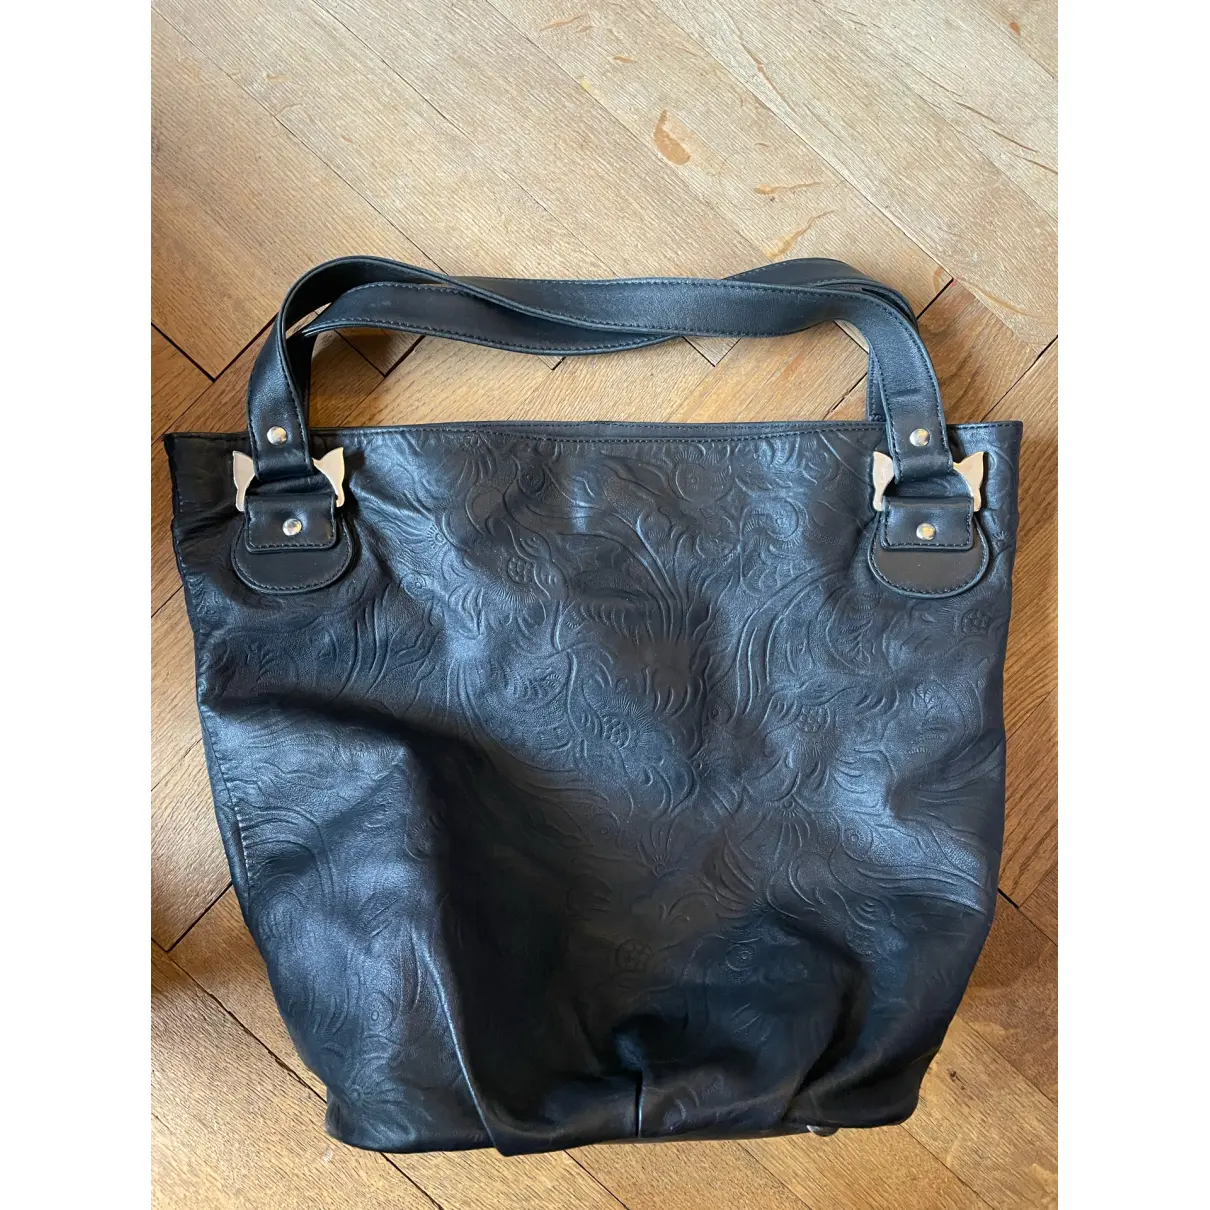 Buy Chacok Leather handbag online